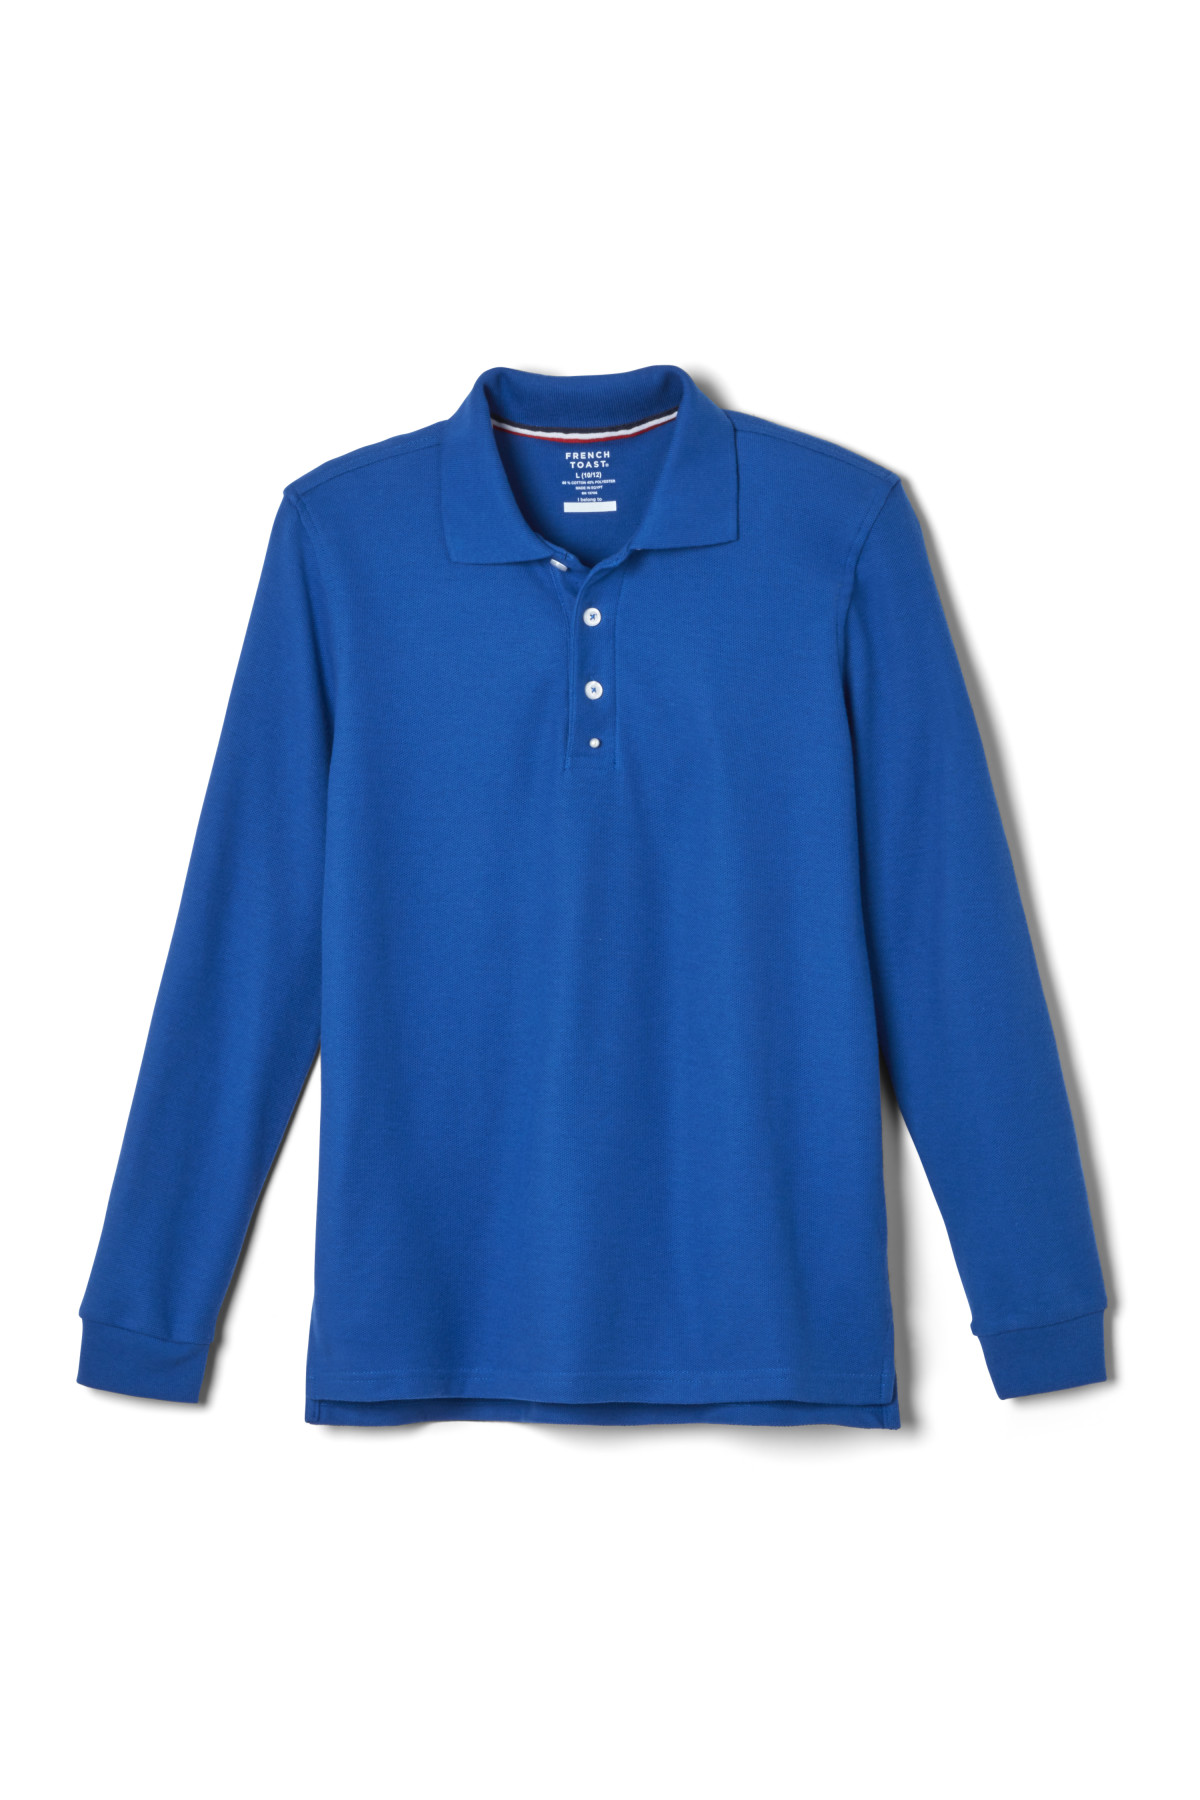 Wholesale Boys Long Sleeve Pique Polo Shirt School Uniform in Royal Blue